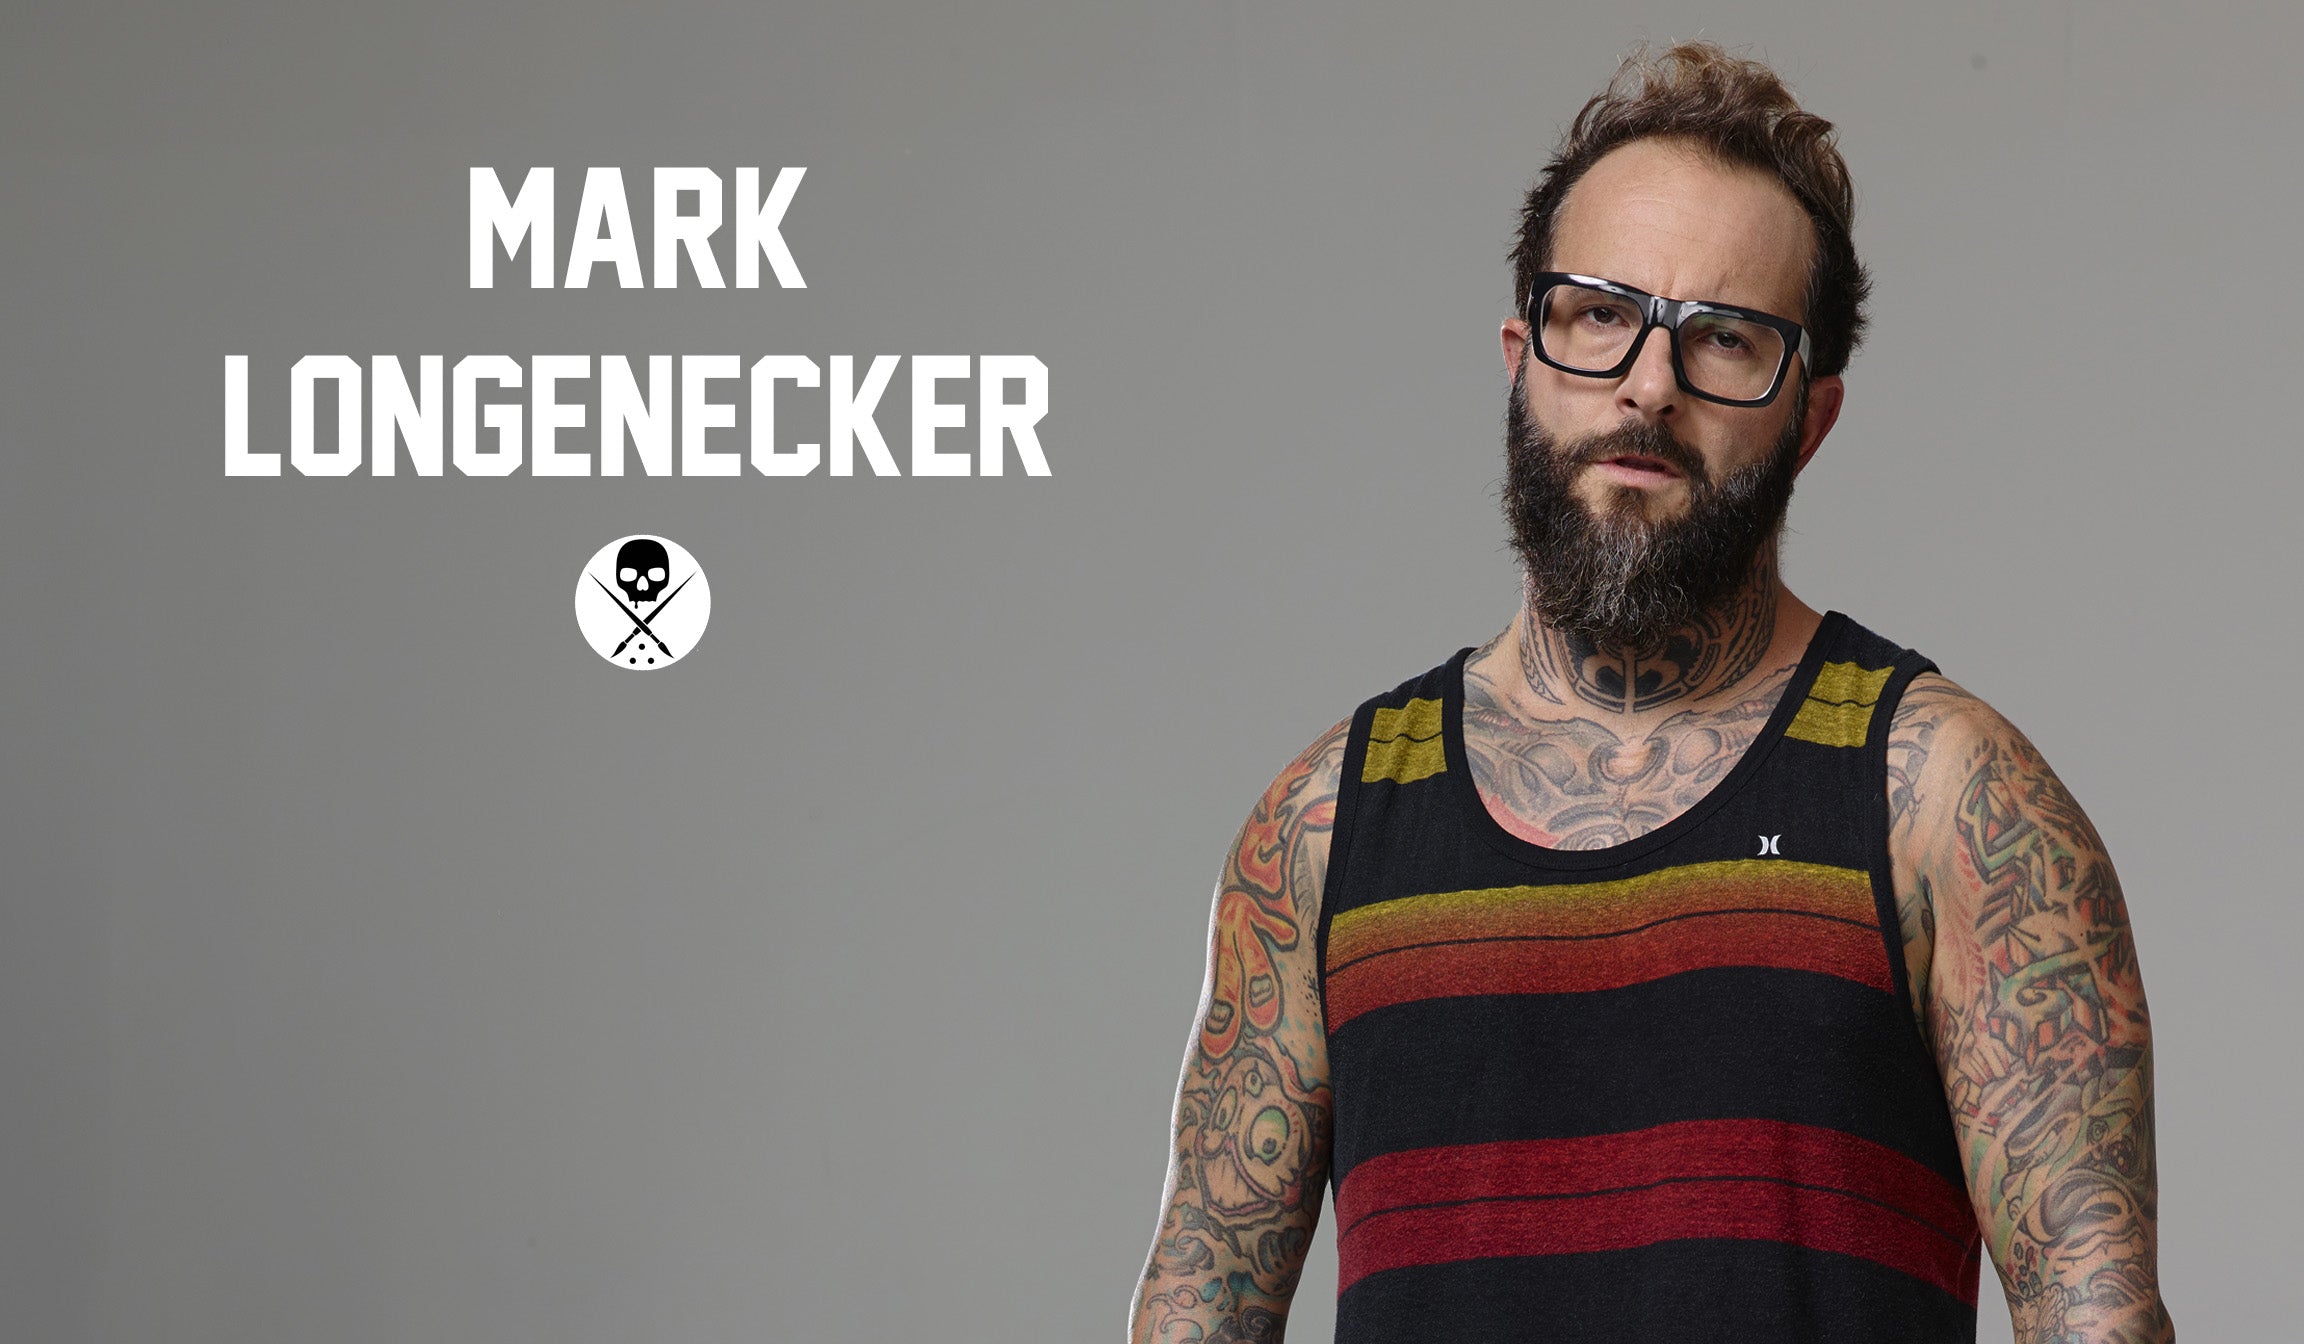 Mark Longenecker on Twitter Cowabunga Man Shred the Gnar Bart I love  surf tattoos marklongenecker SpikeInkMaster summertime  httpstcorApkCqe7b0  Twitter